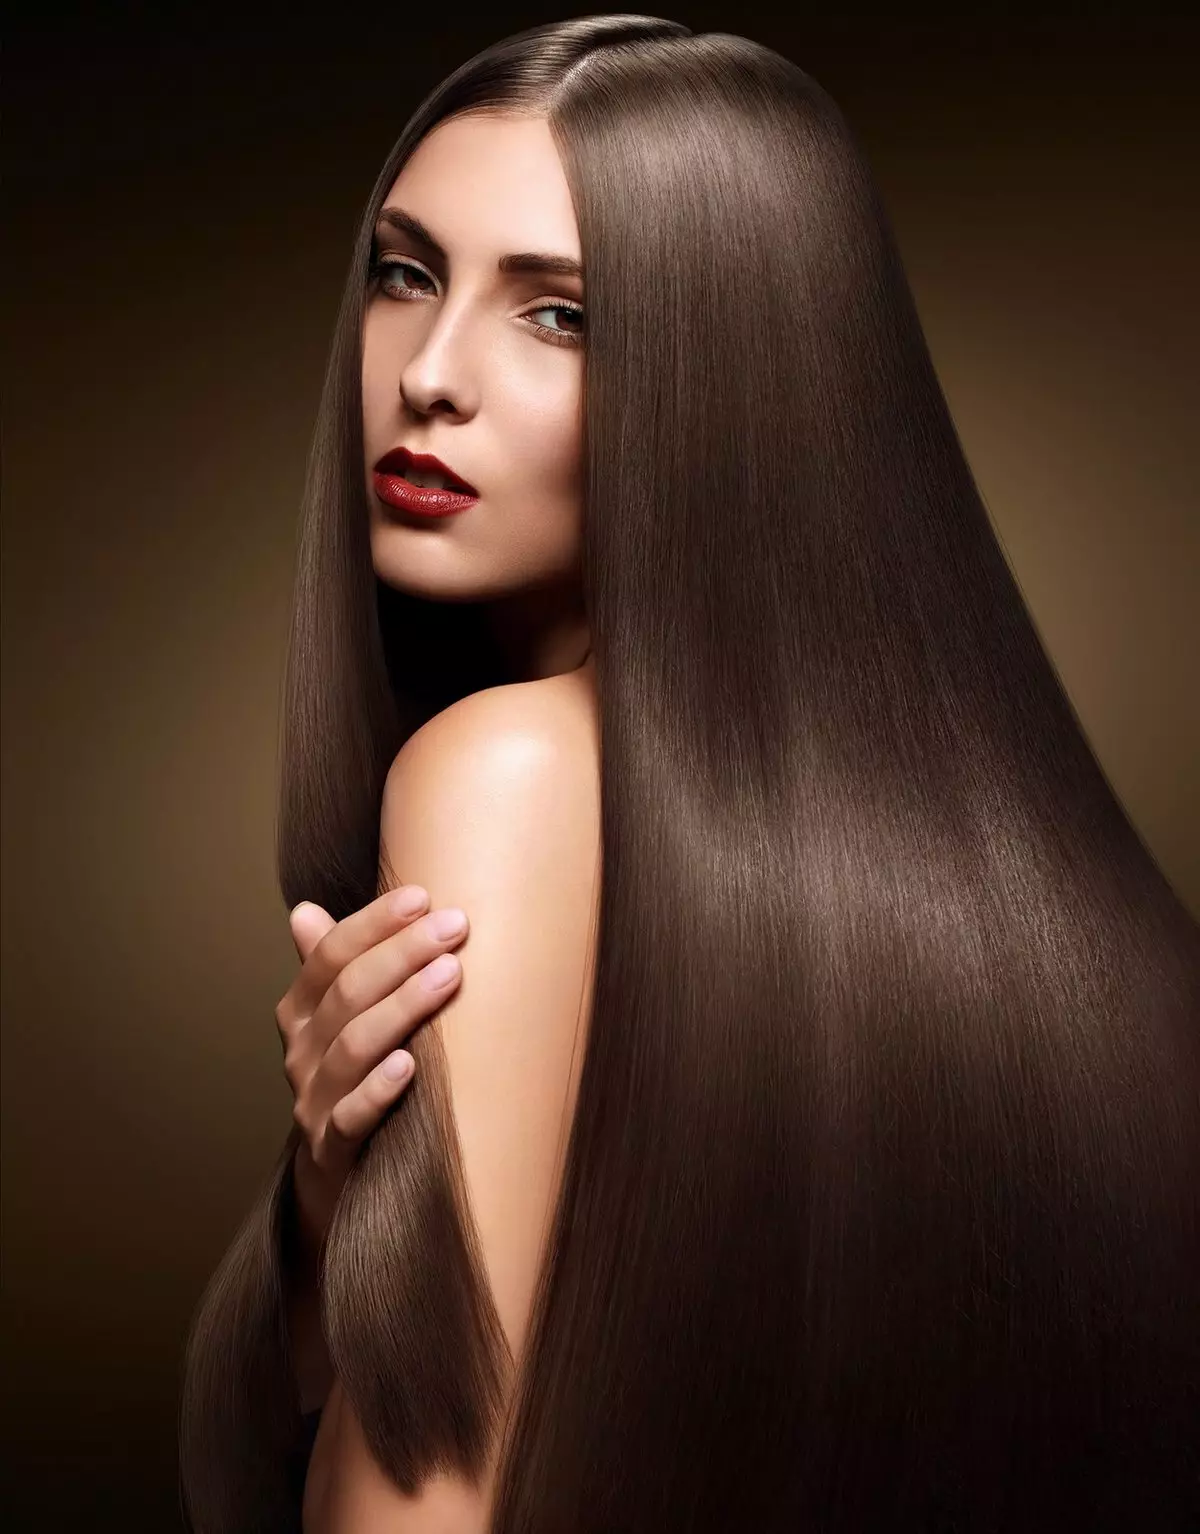 Šampon Estel Keratin: Sastav i karakteristike aplikacije Keratin Hair šampon iz Estela, recenzija 6065_13